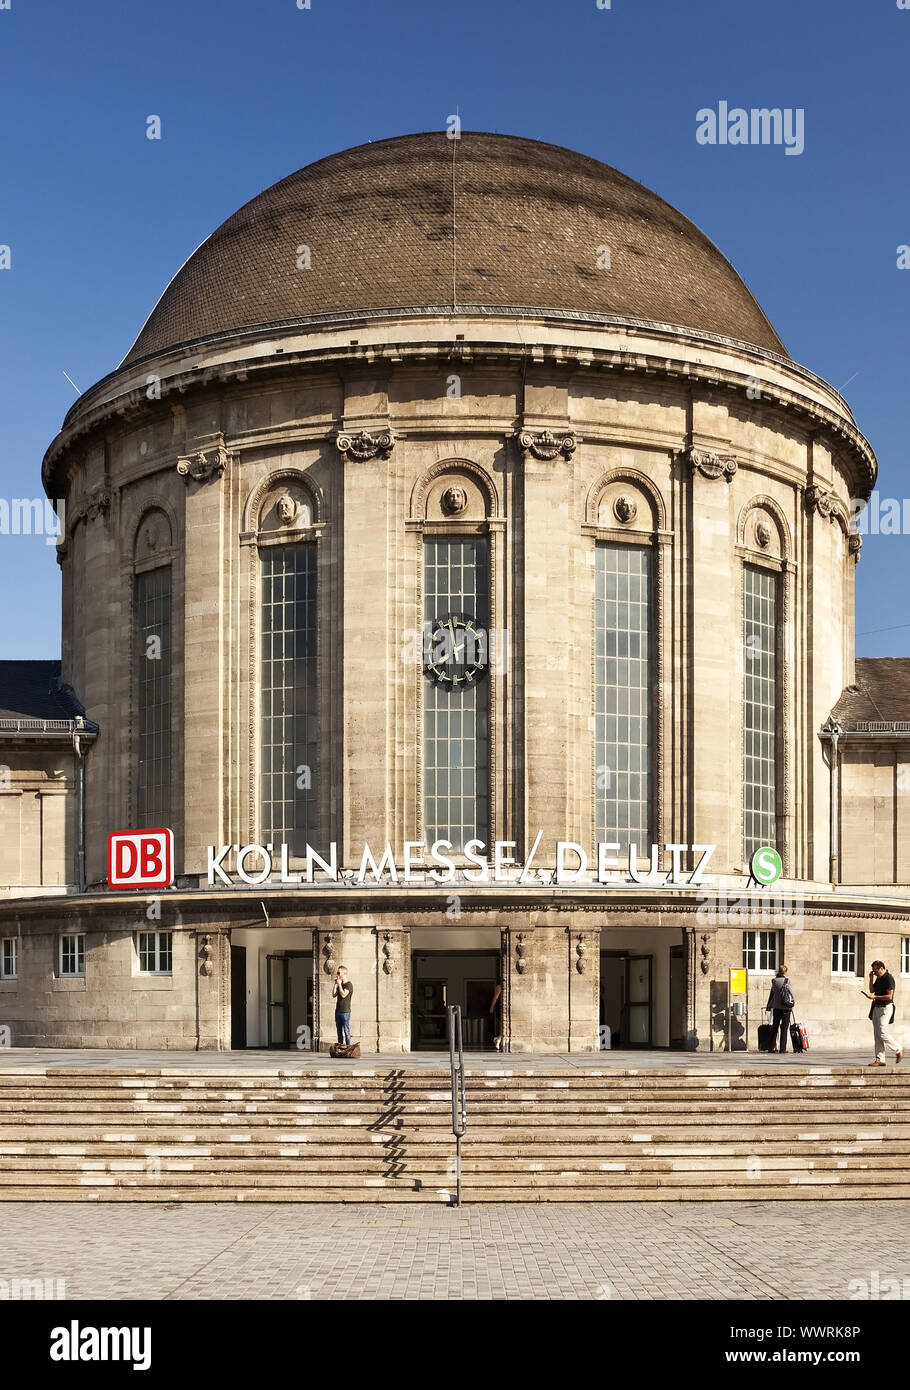 Koeln Messe/Deutz station building, Cologne, North Rhine-Westphalia,  Germany, Europe Stock Photo - Alamy